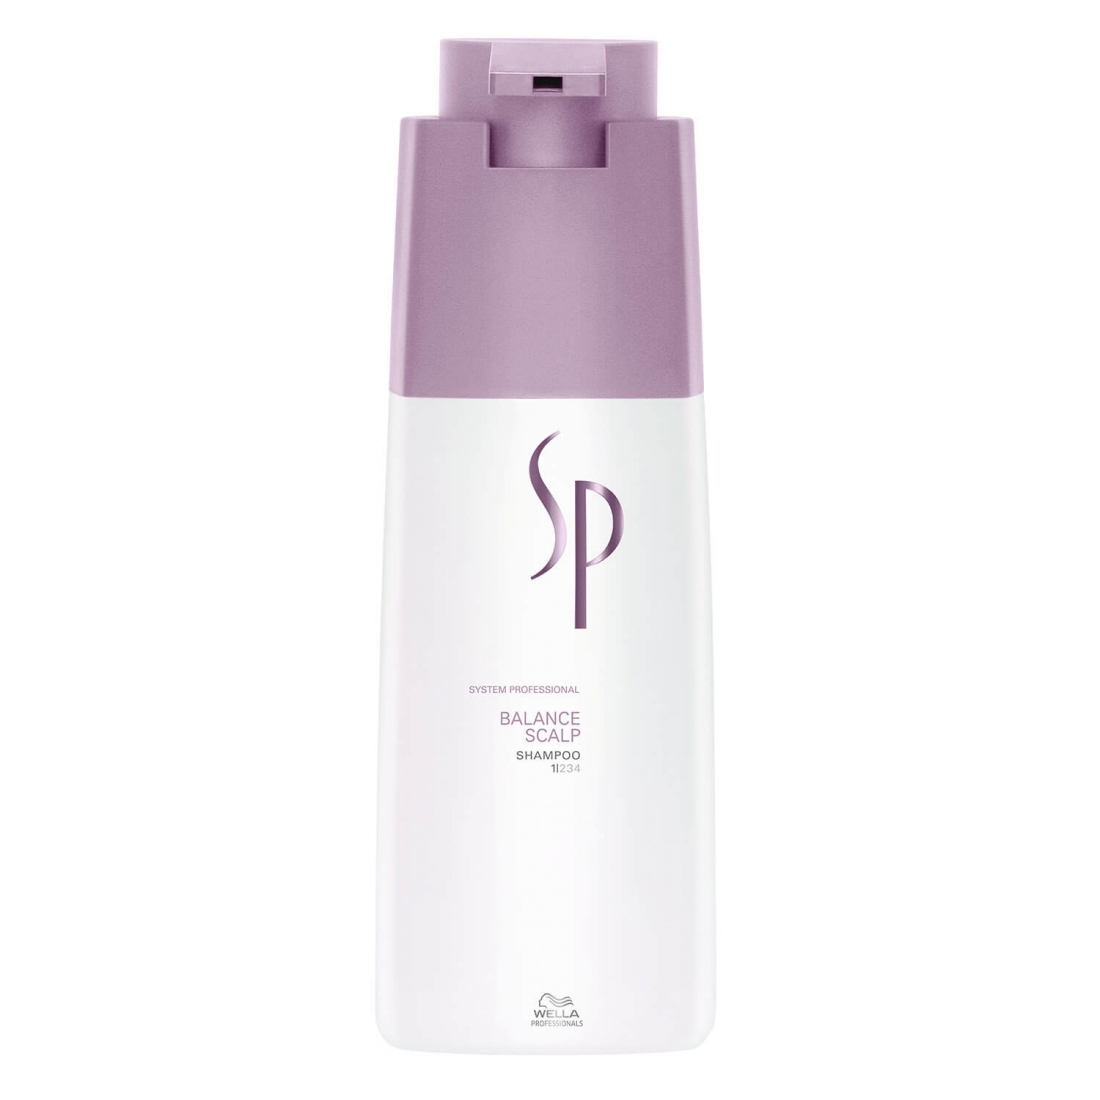 'SP Balance Scalp' Shampoing - 1 L